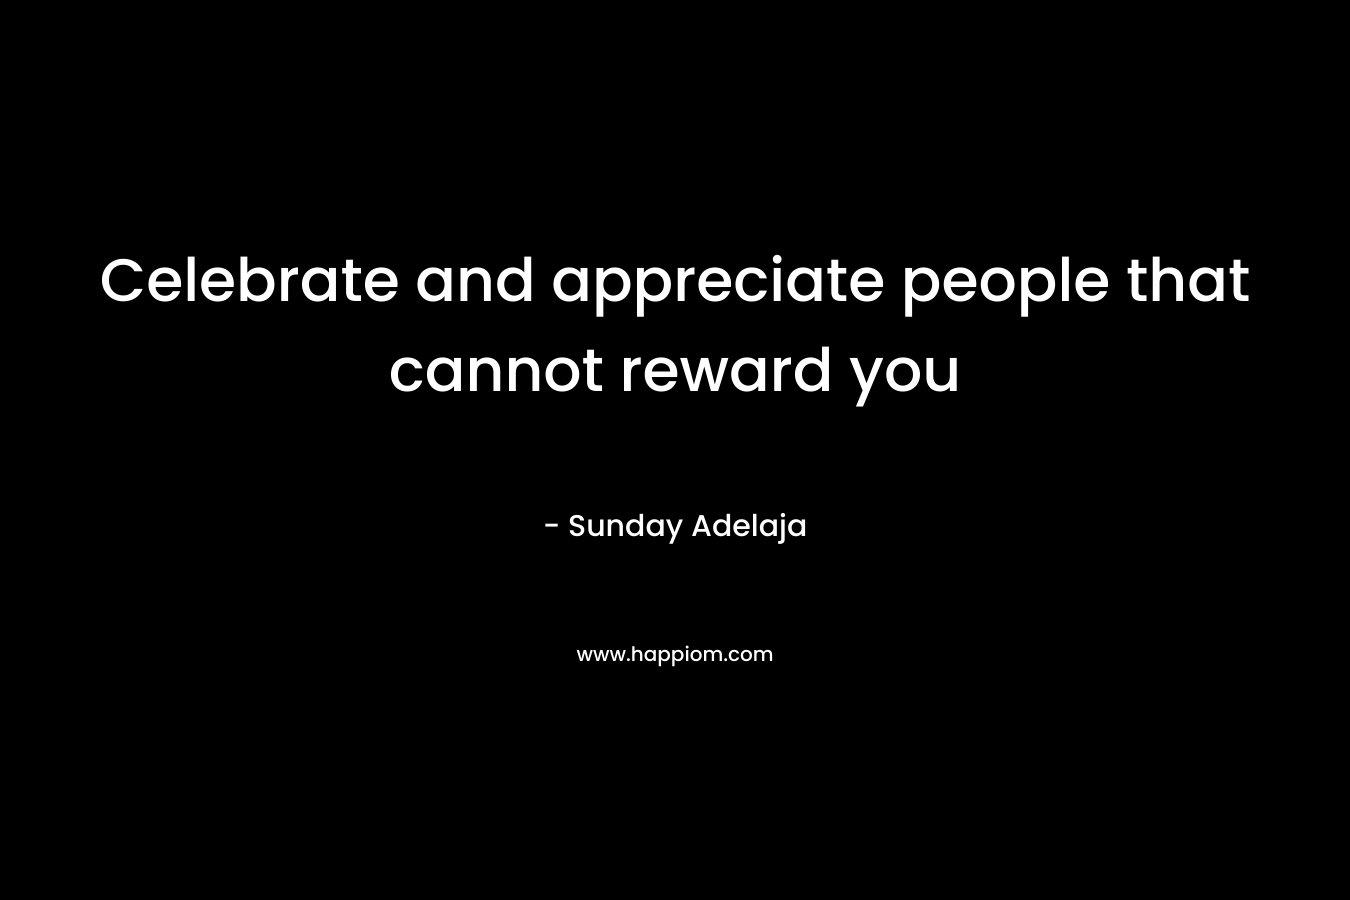 Celebrate and appreciate people that cannot reward you